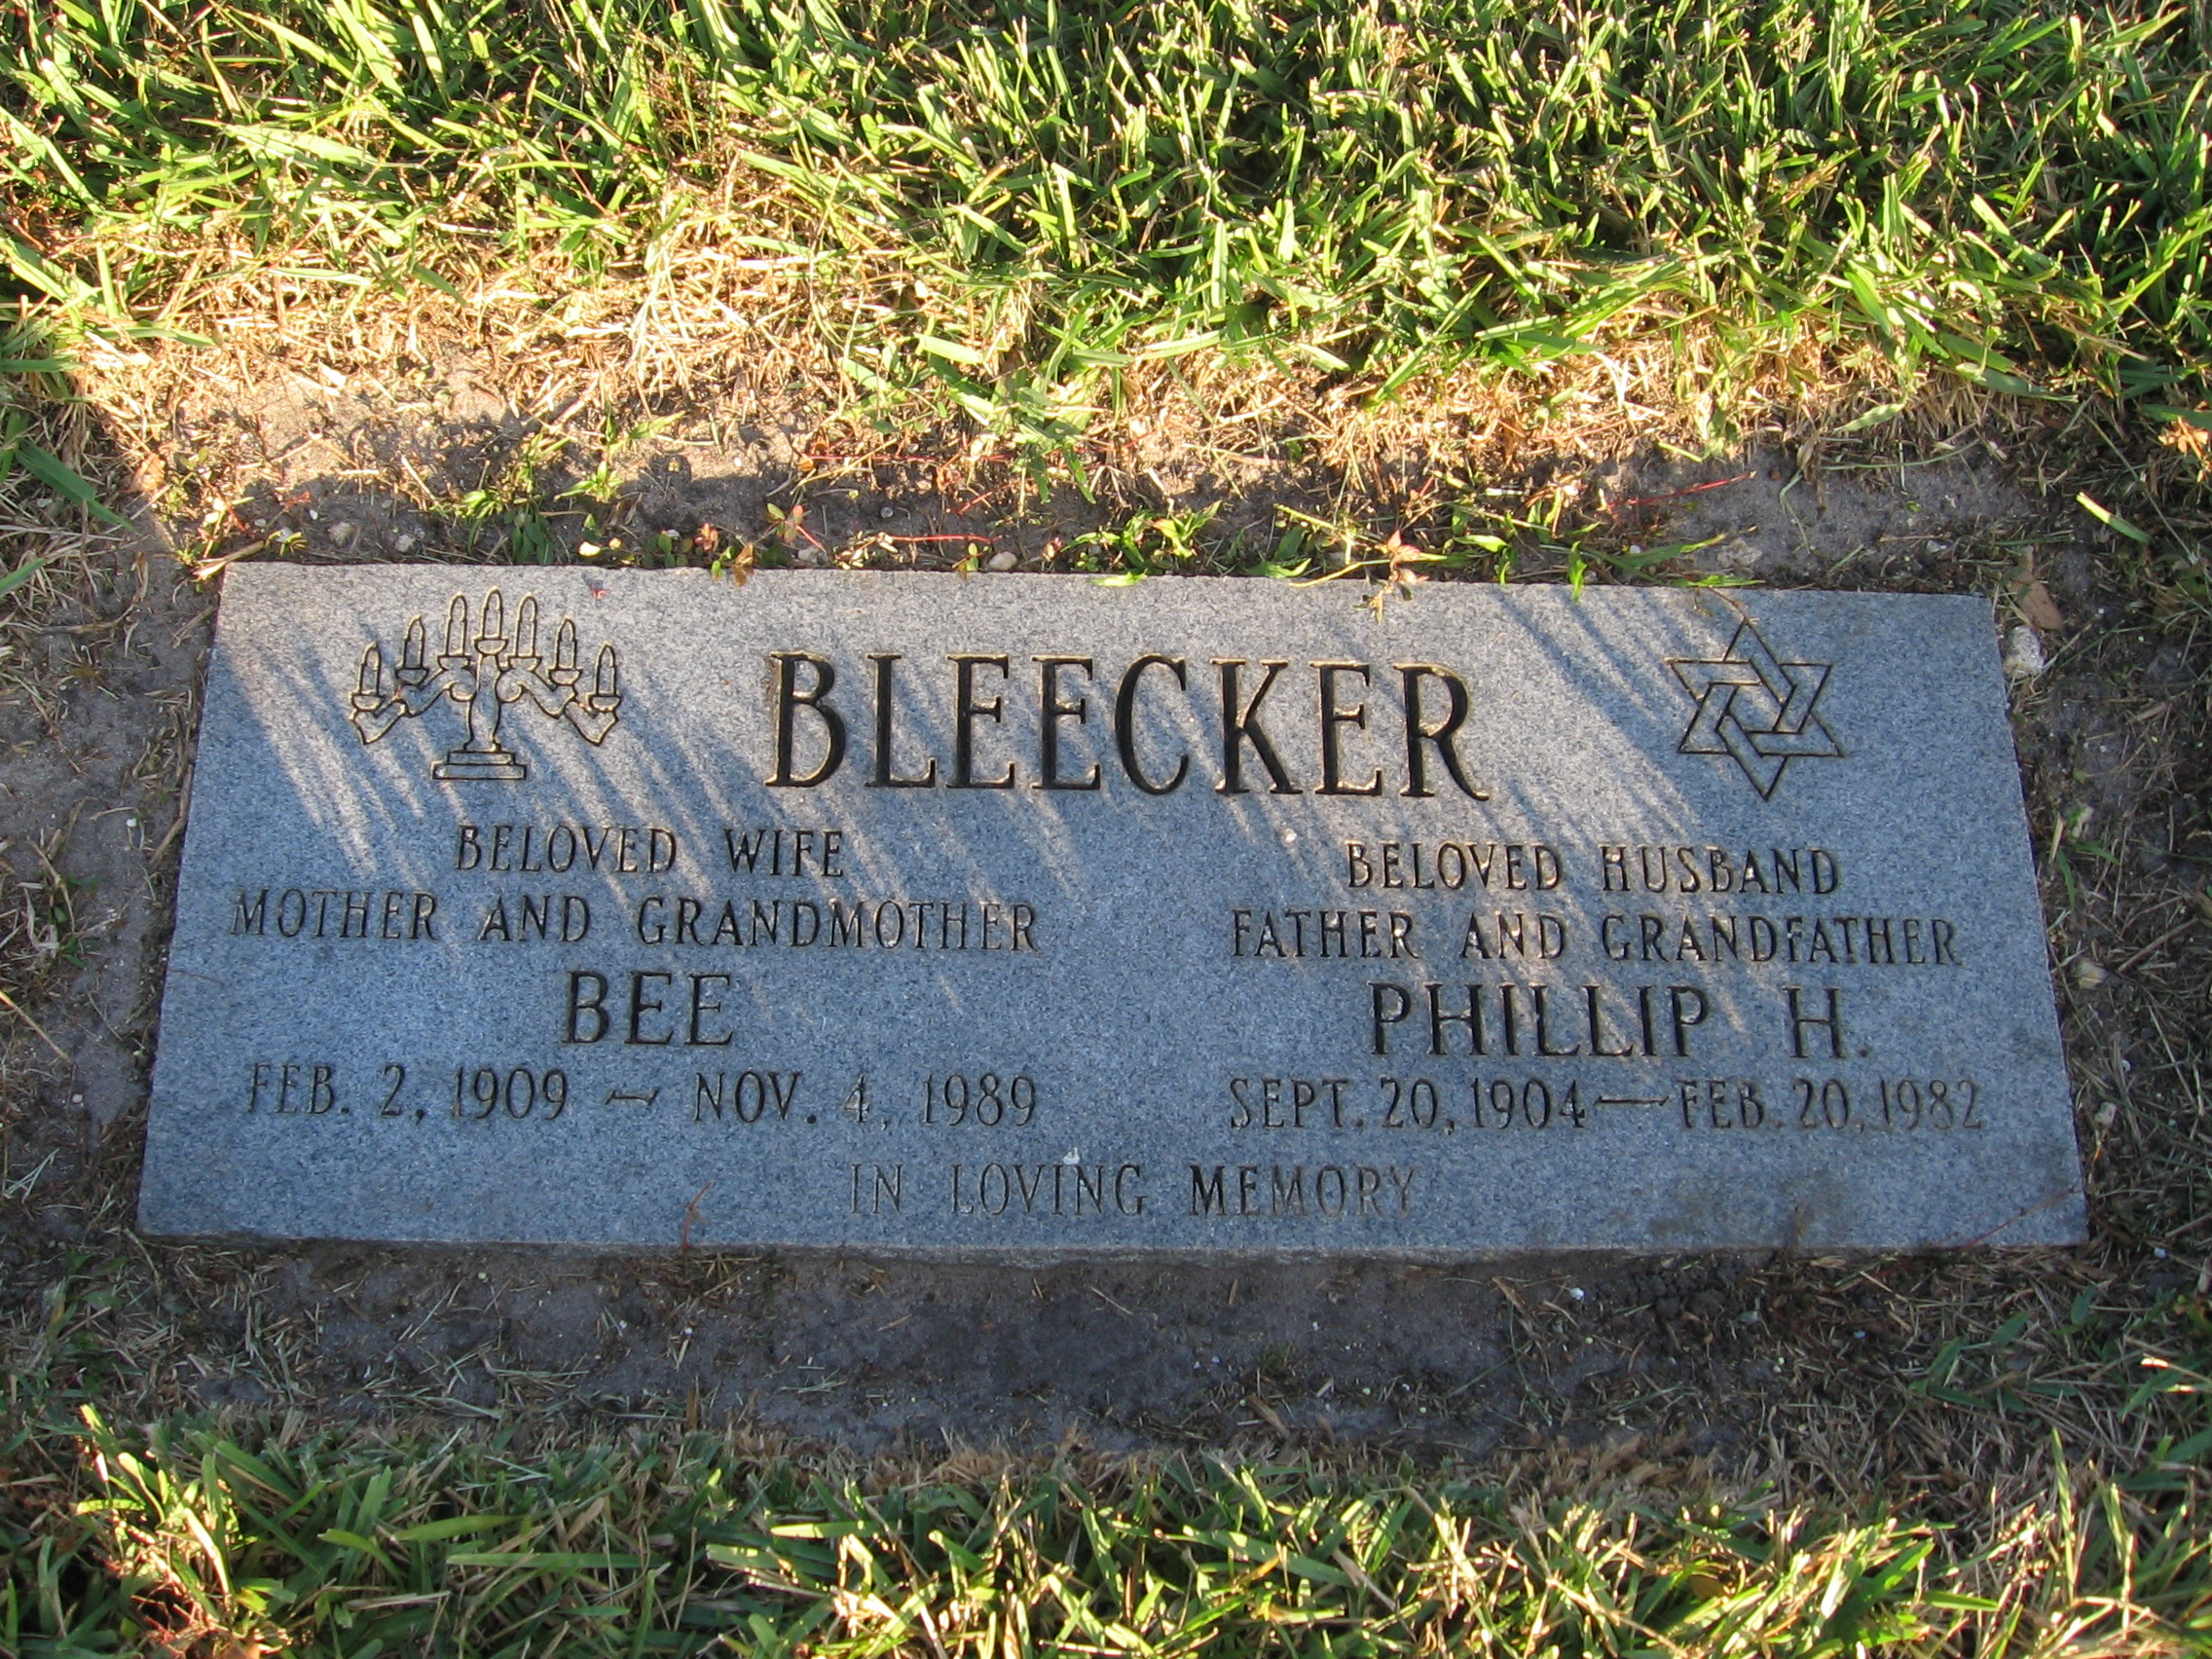 Bee Bleecker